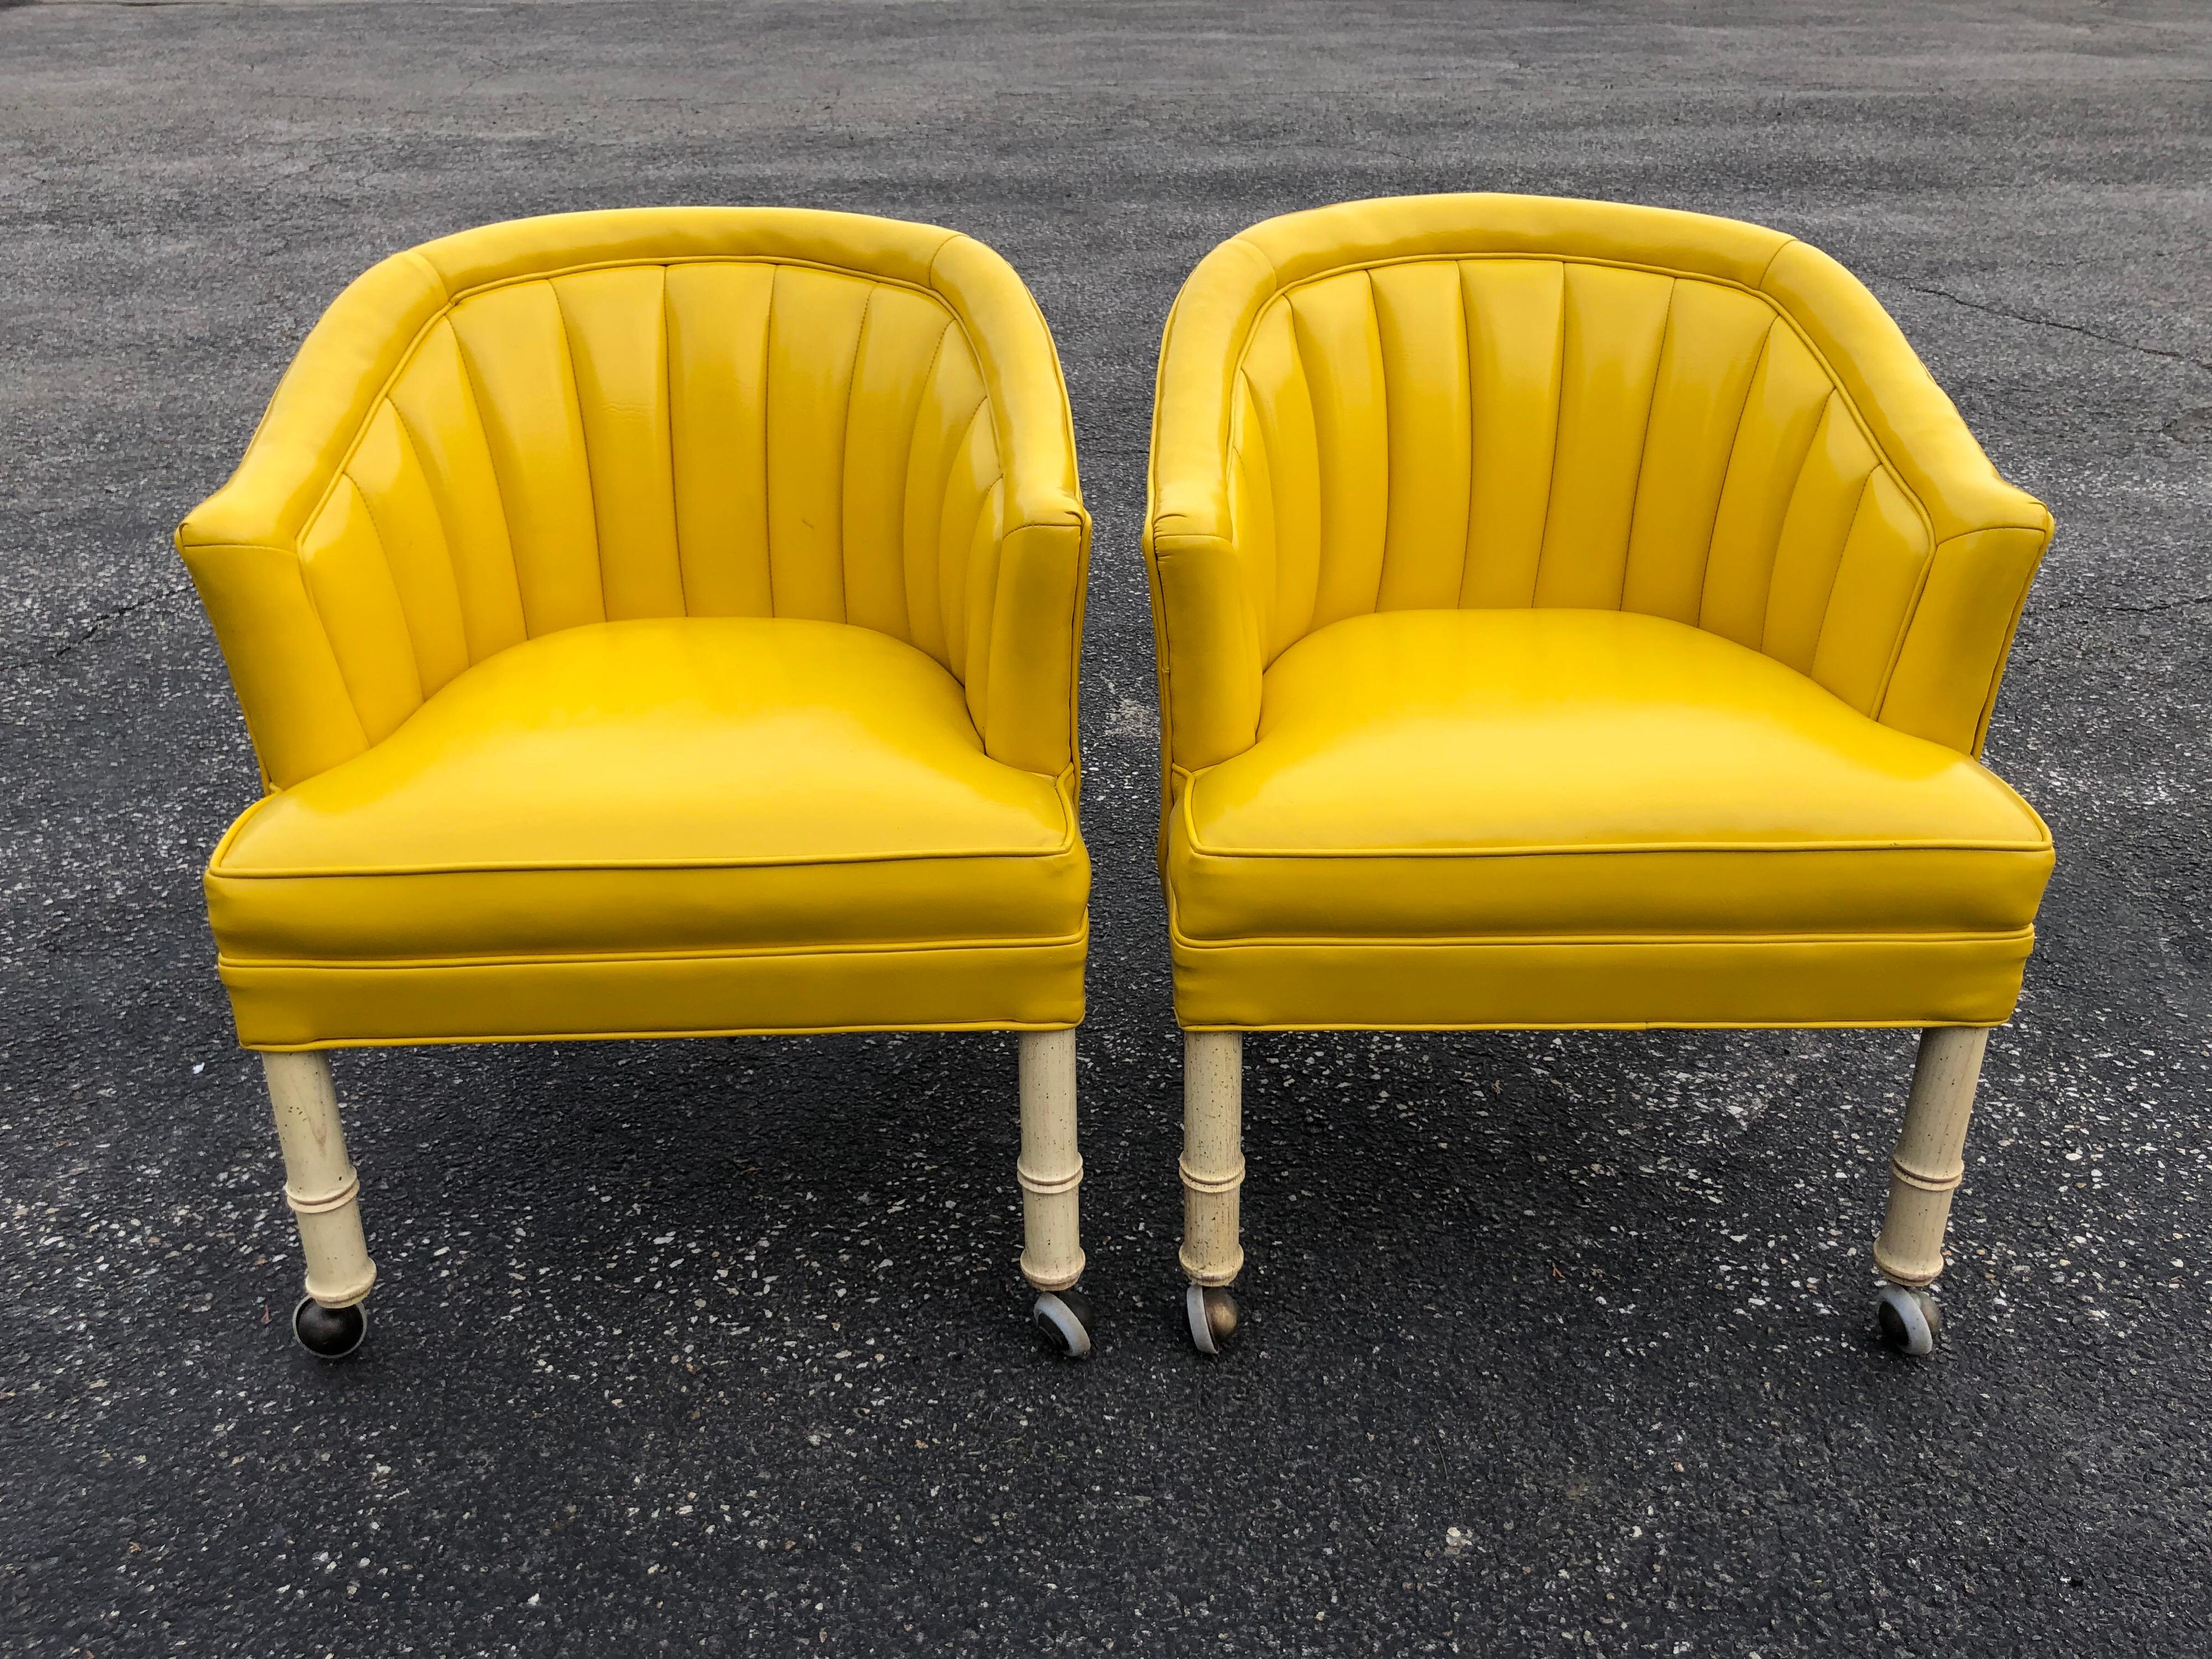 bright yellow chairs